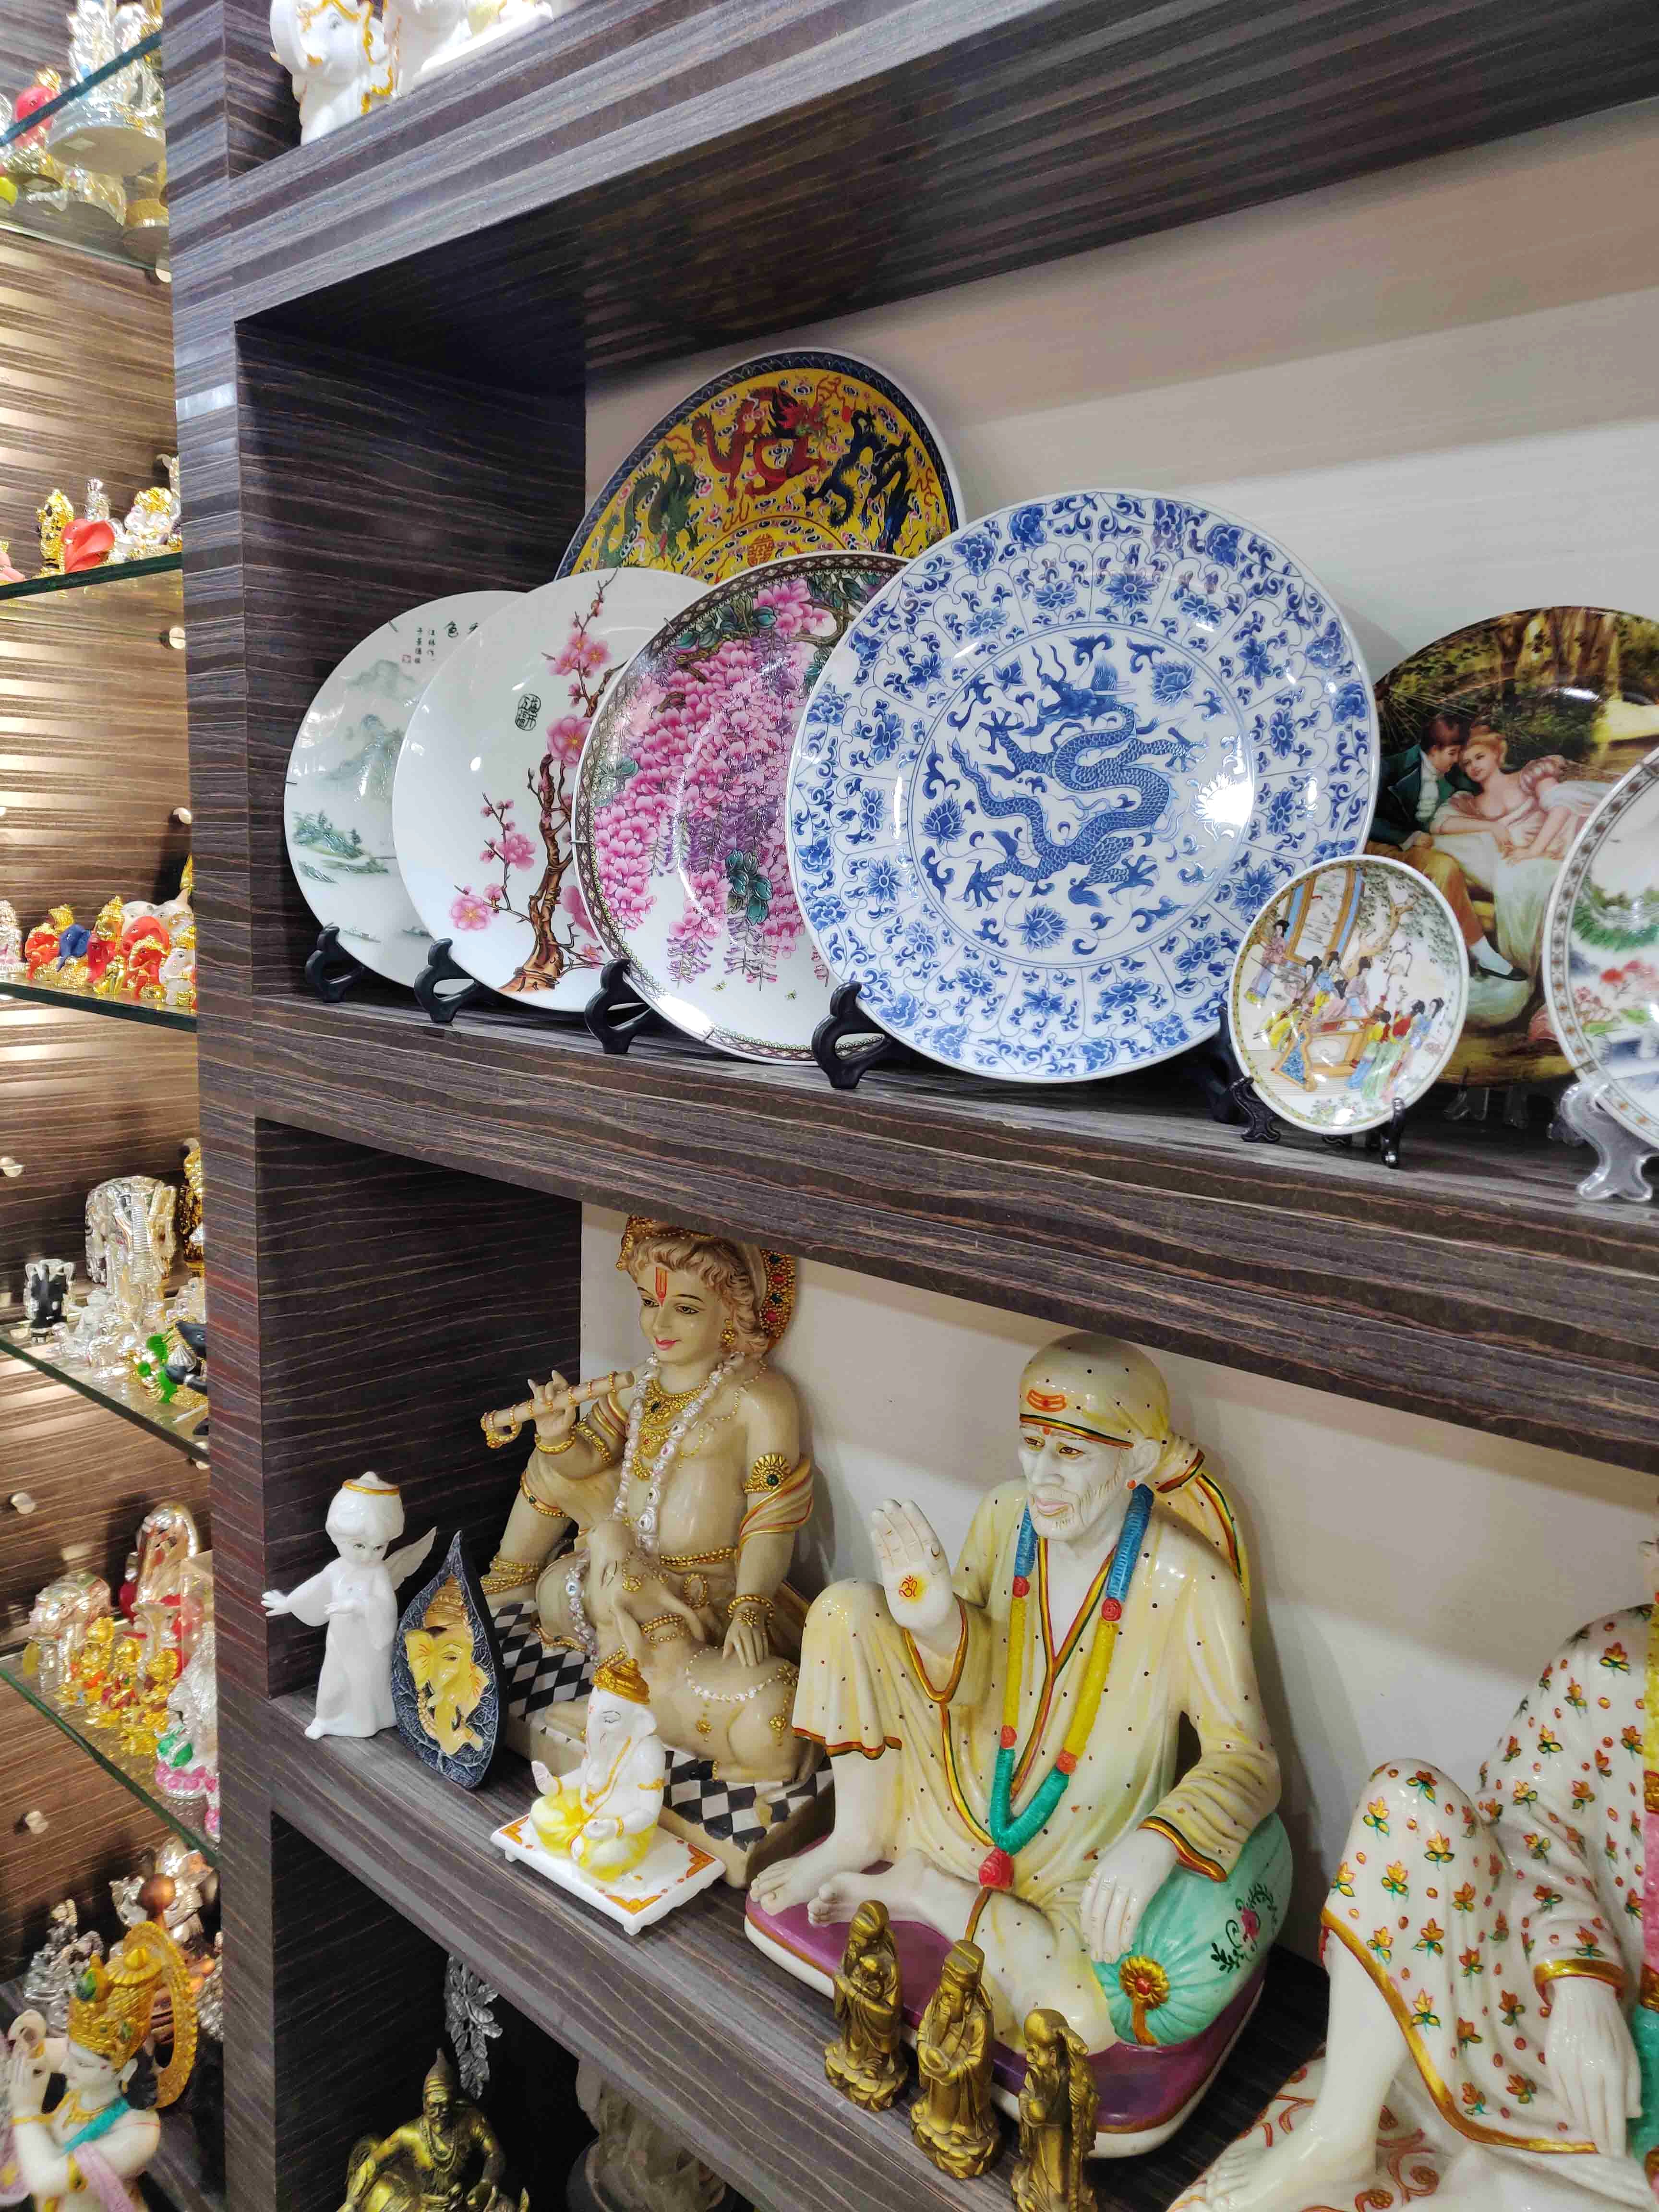 Shelf,Porcelain,Ceramic,Room,Collection,Souvenir,Tableware,Interior design,Dishware,Shelving